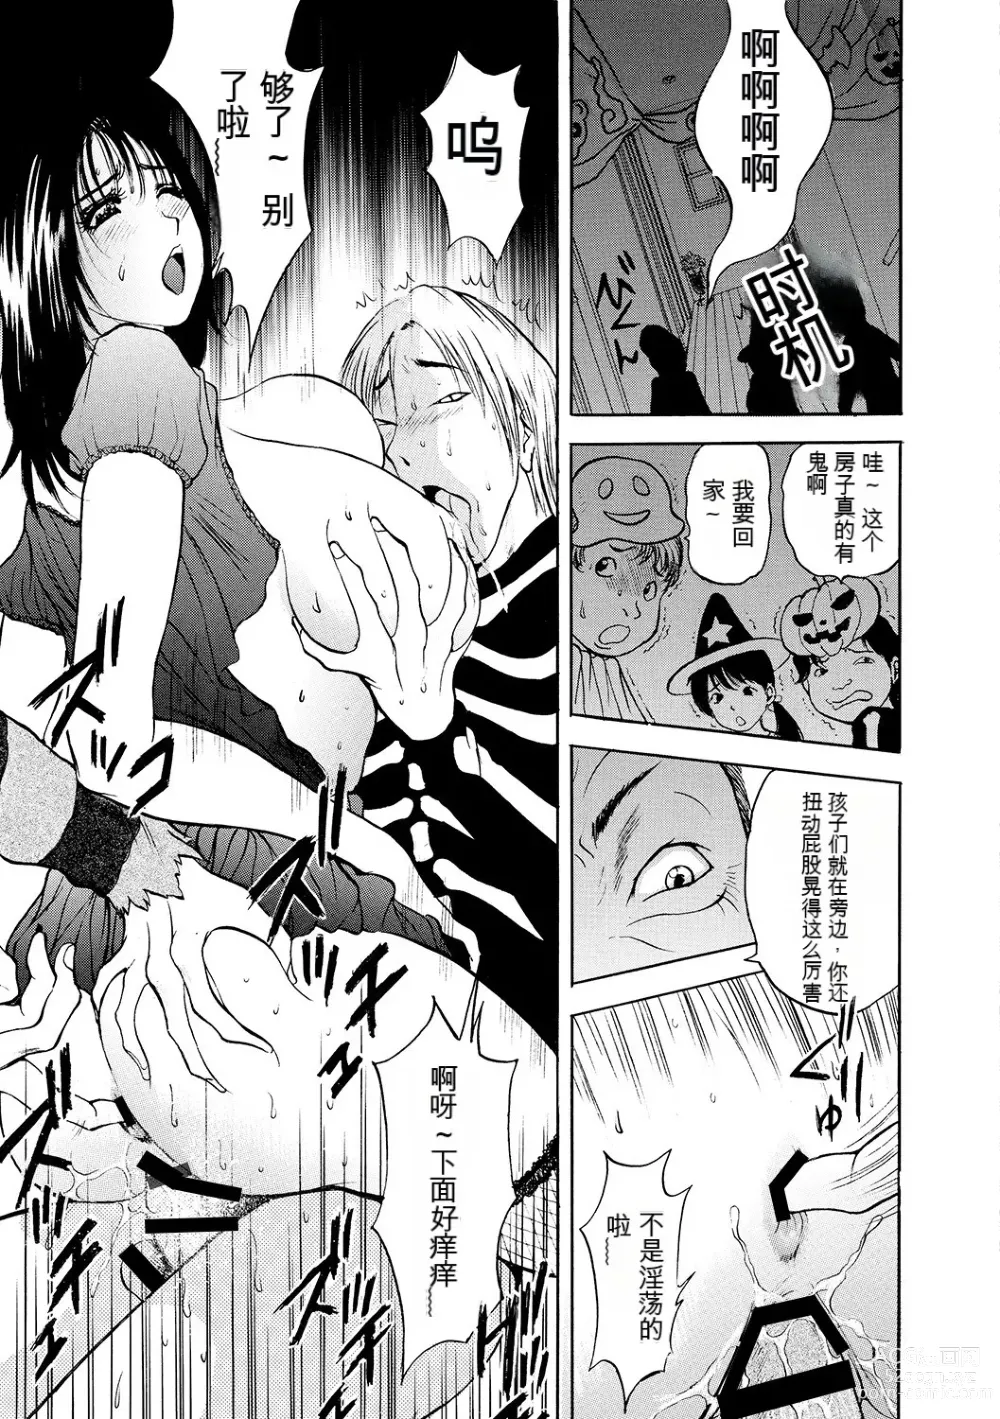 Page 201 of manga 母淫いぢり Boin Ijiri